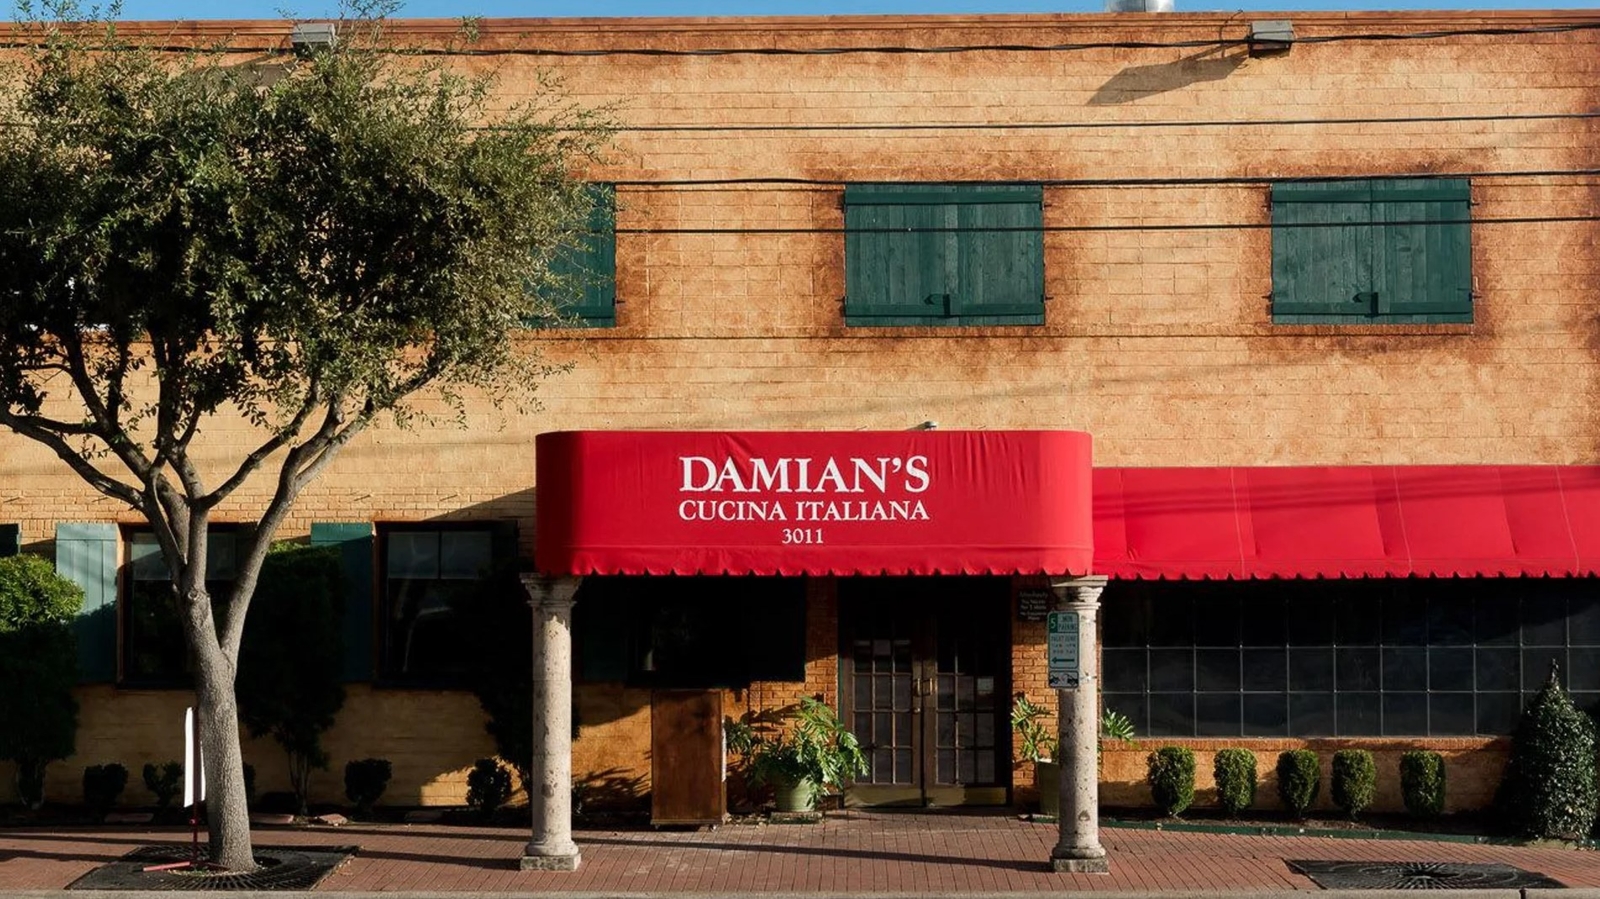 Houston’s historic Damian’s Cucina Italiana restaurant announces closure after 41 years [Video]